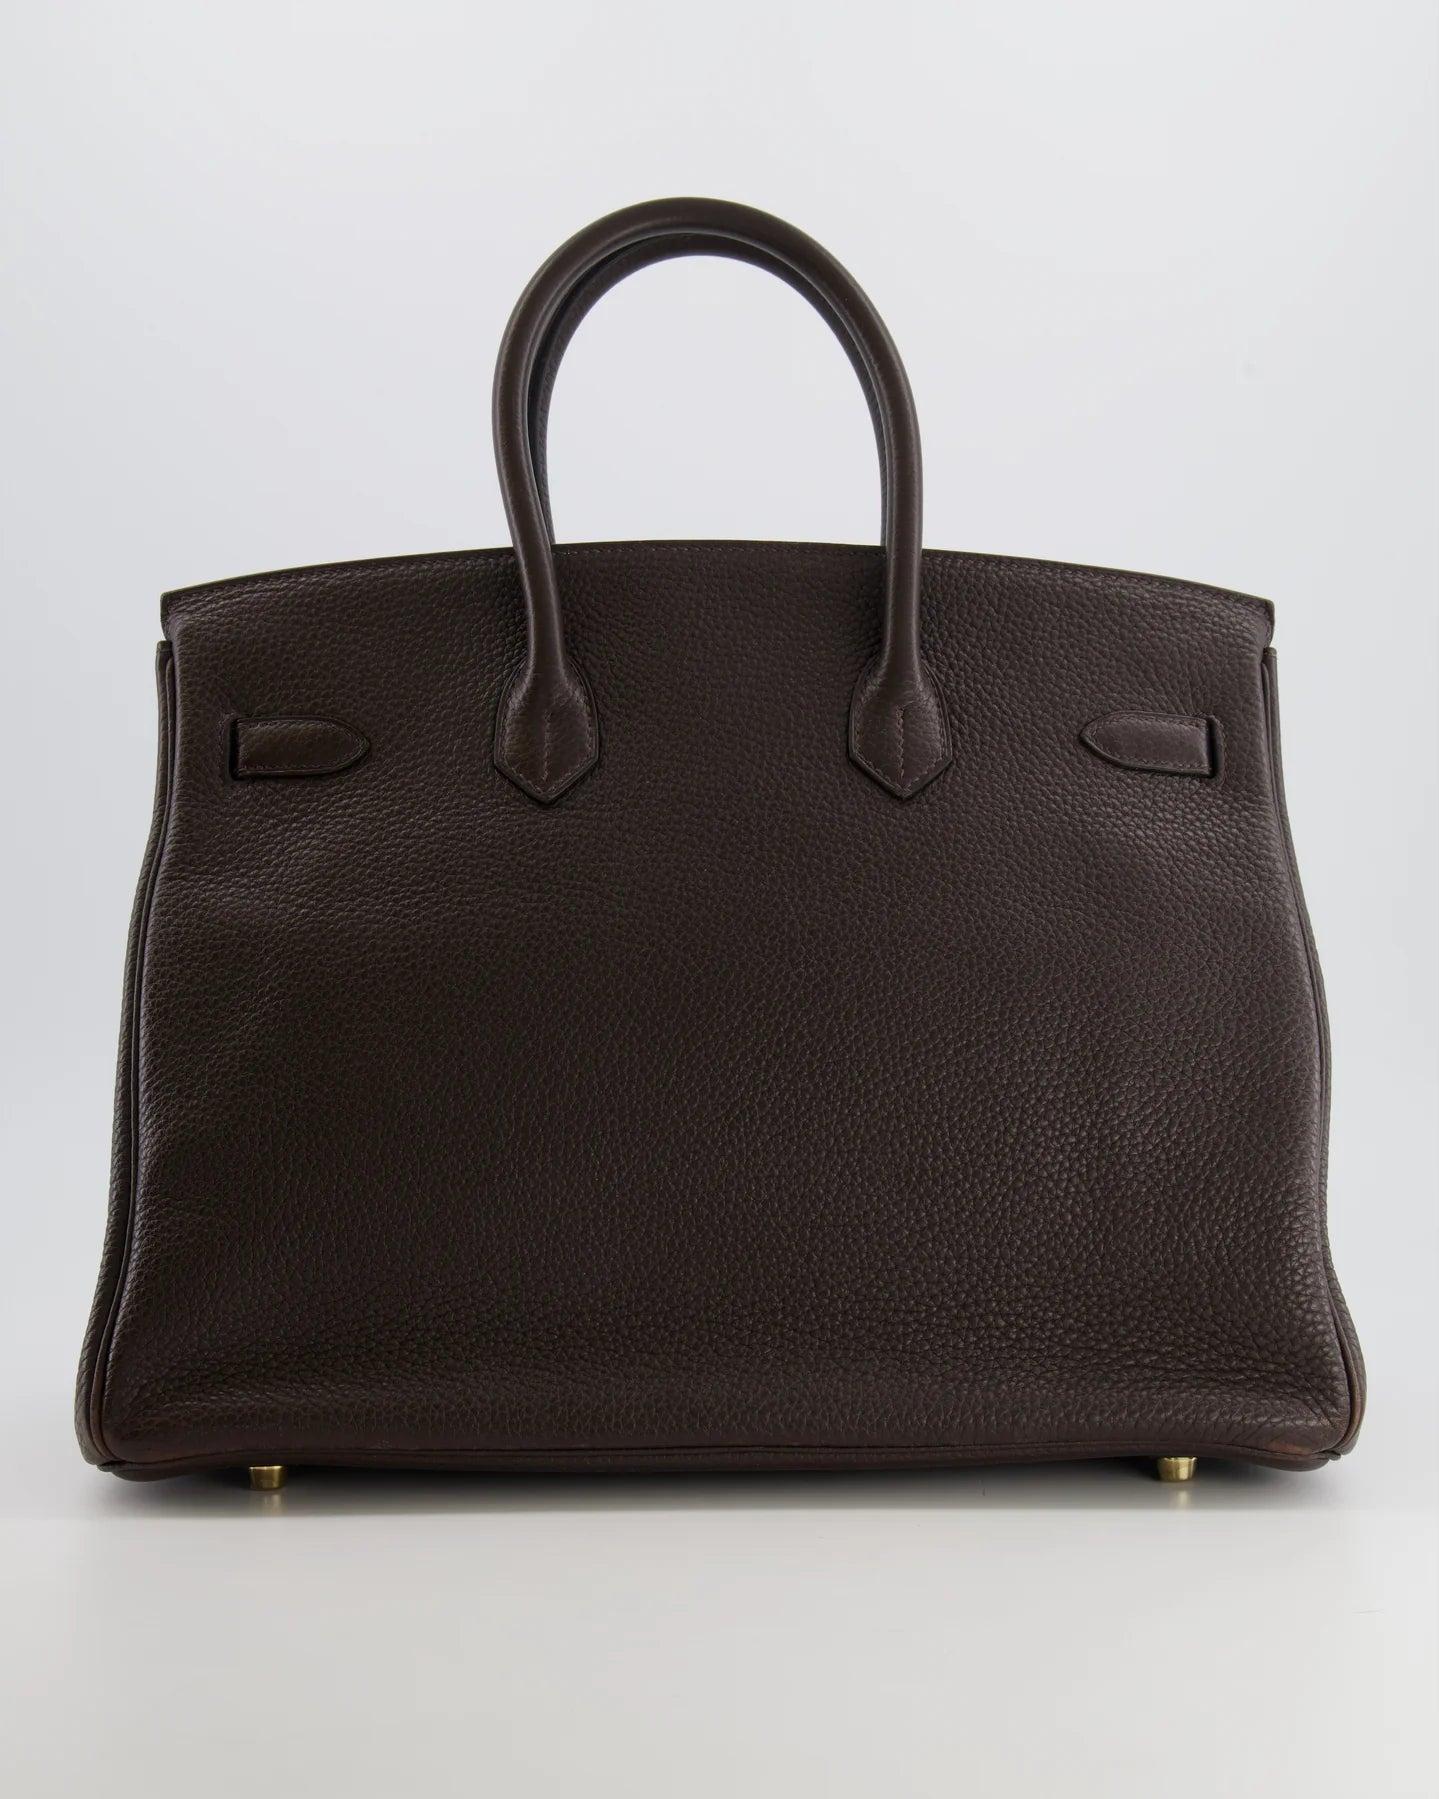 Hermes Birkin Bag, Etain Brown, 35cm, Clemence with palladium